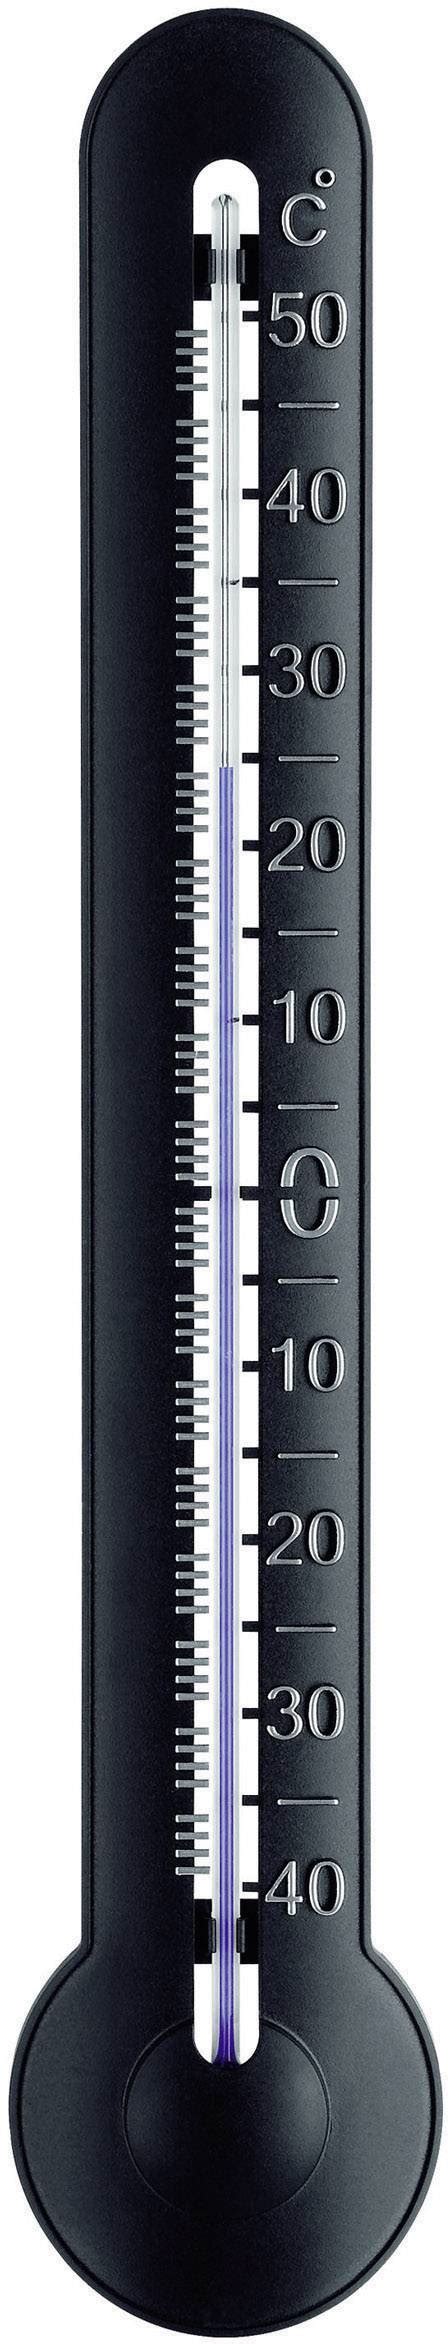 wand thermometer tfa  conradbe